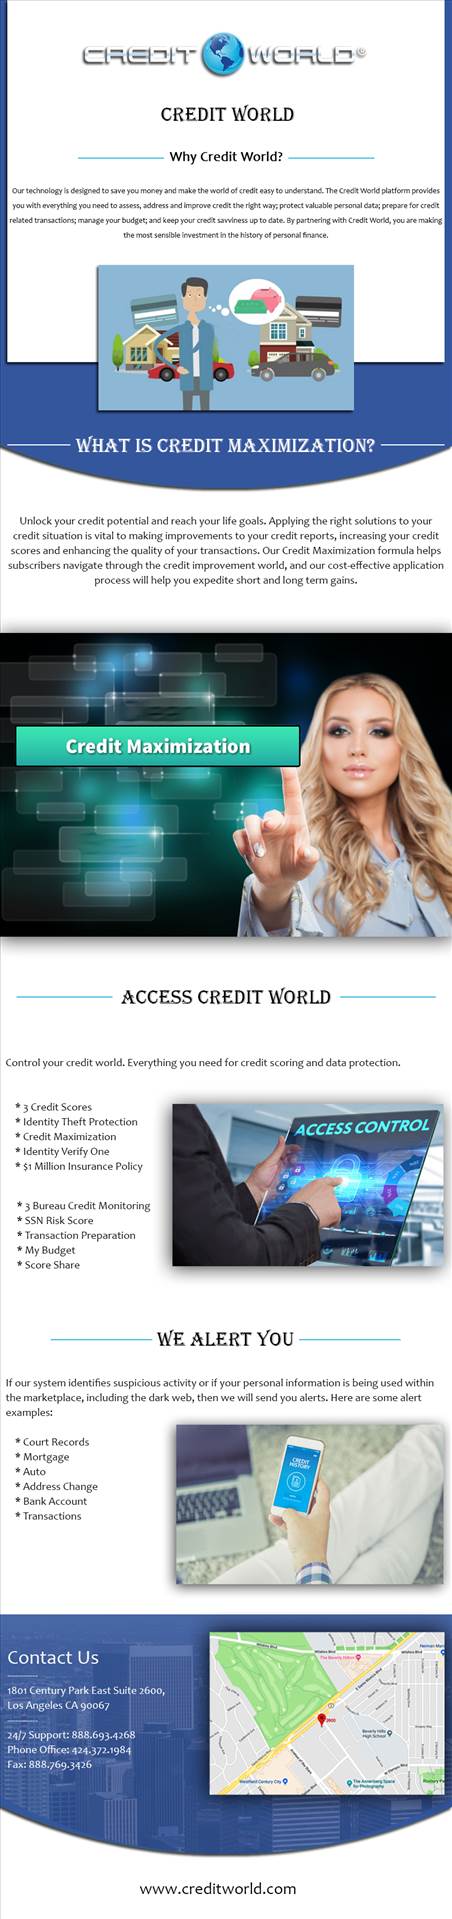 Credit World.jpg  by CreditWorld